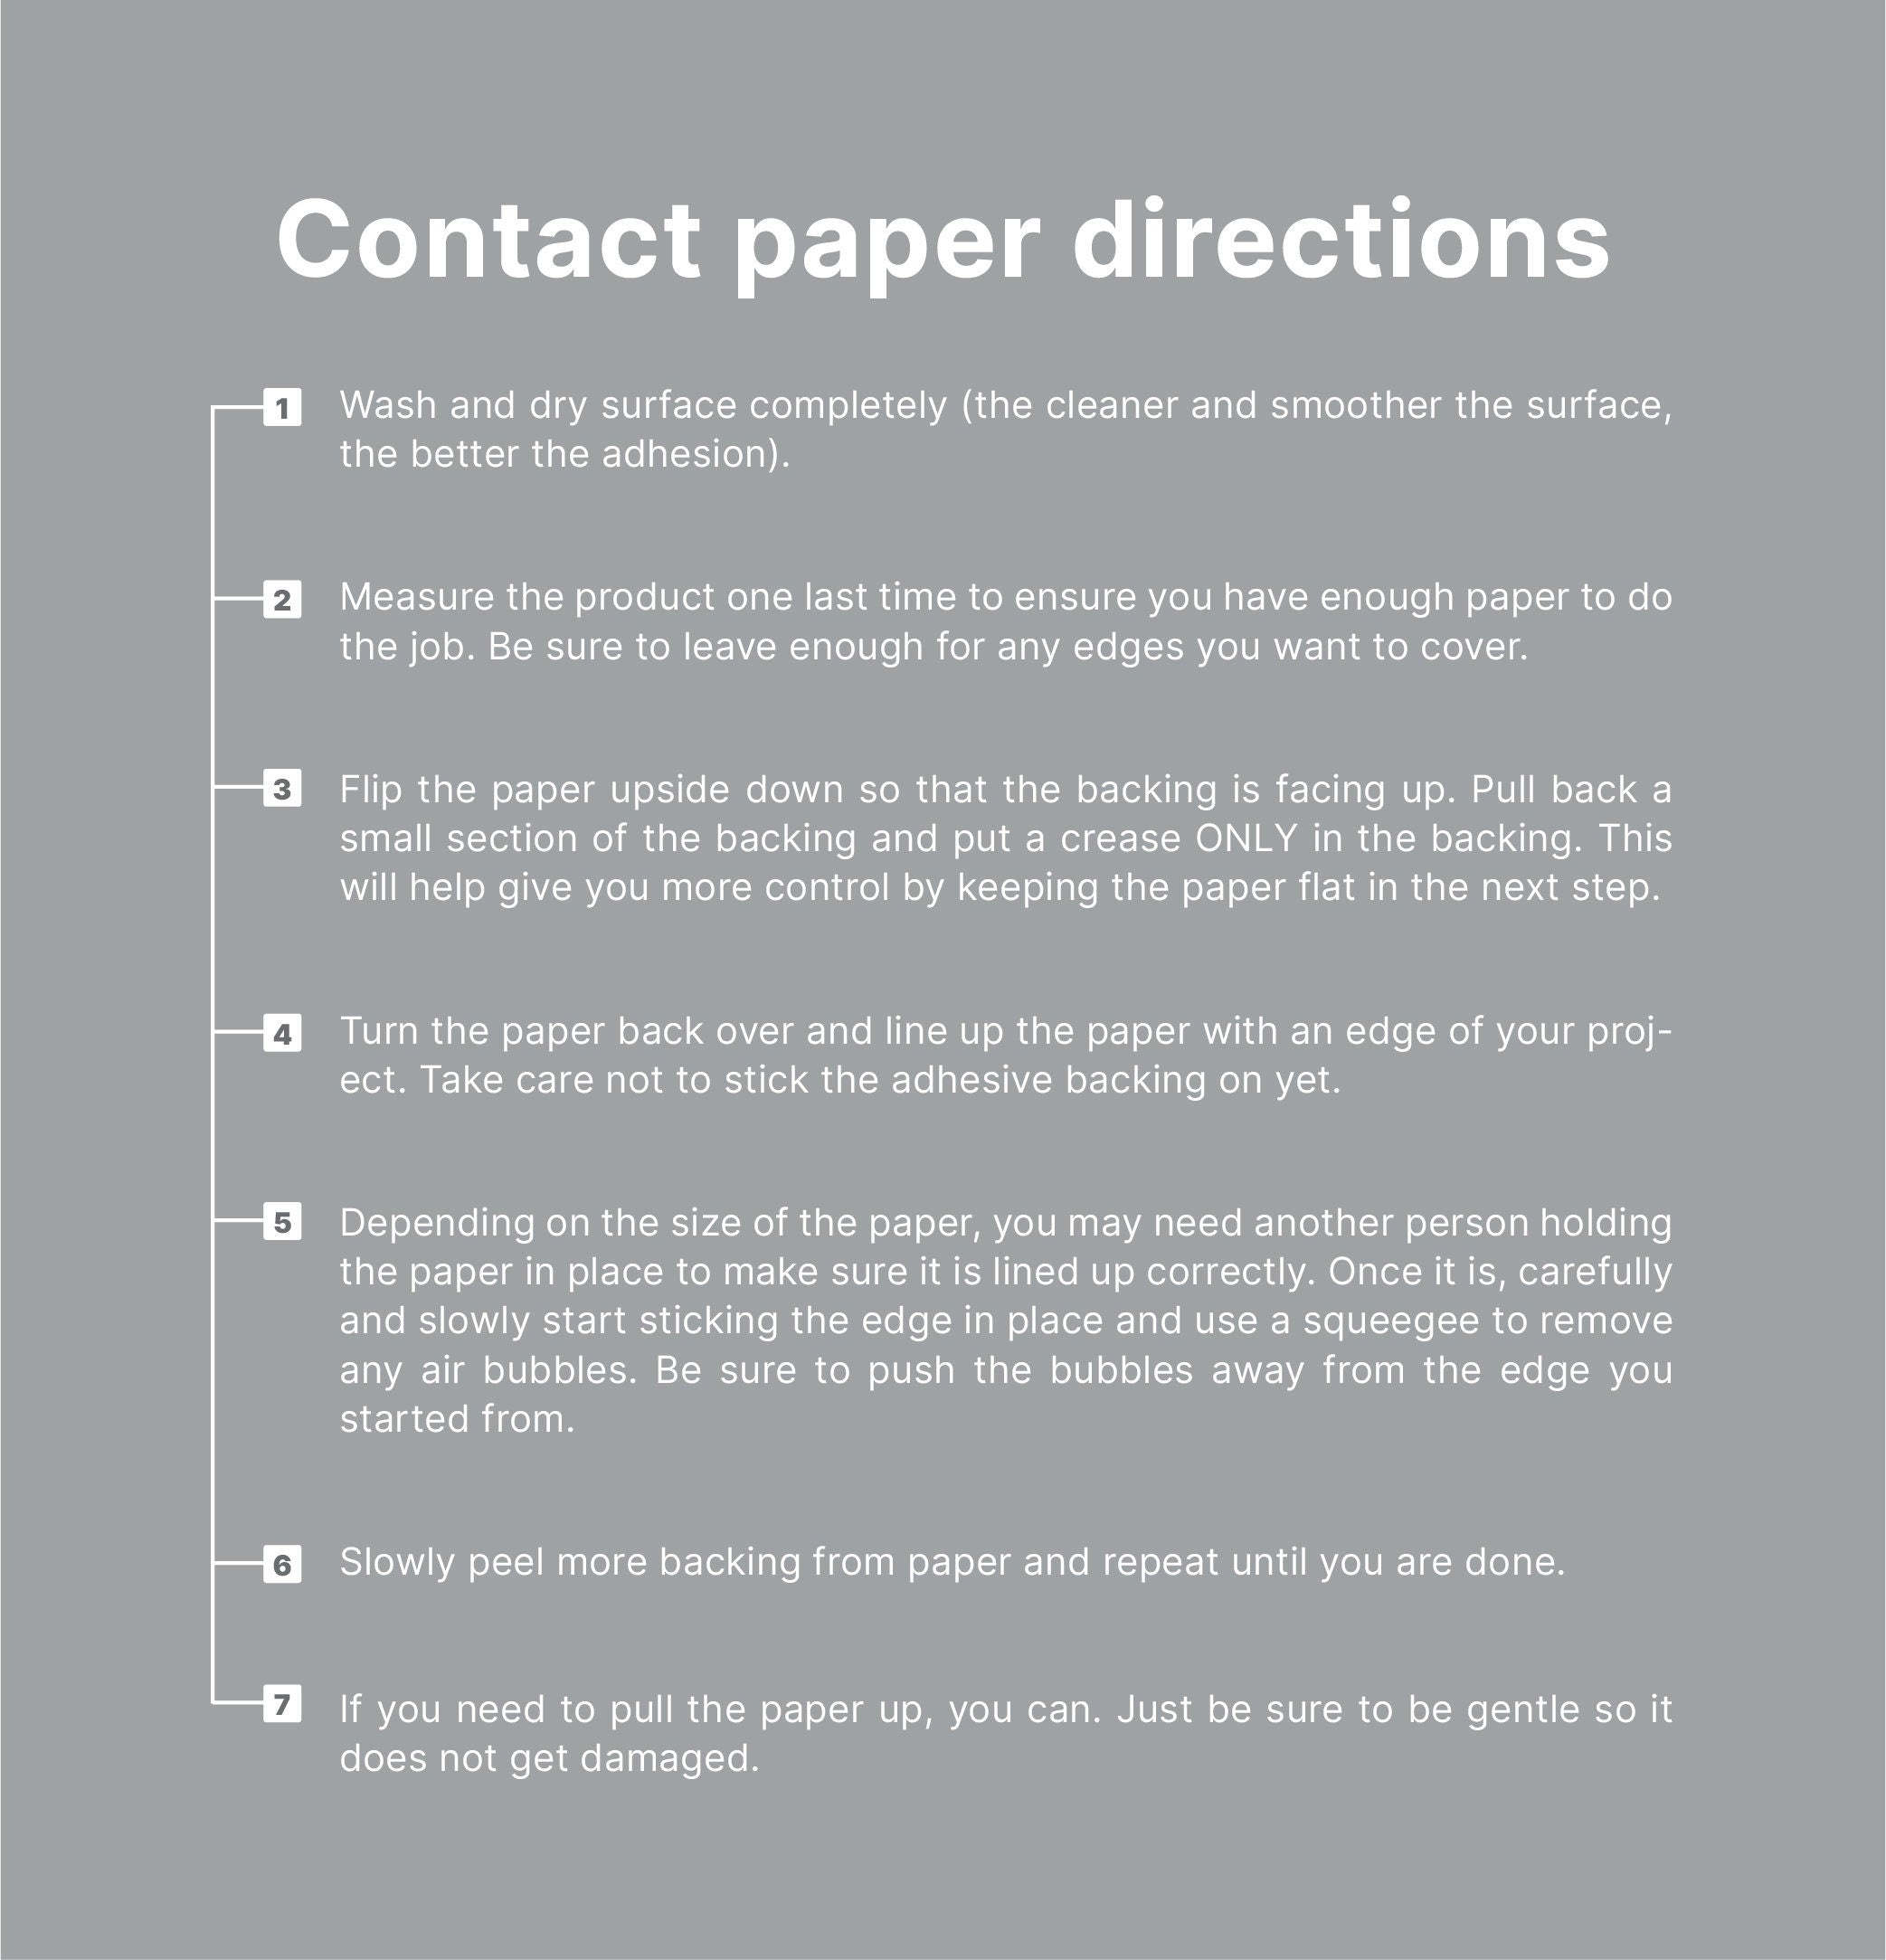 Contact Paper Floral Lemon Fruits | Peel And Stick Wallpaper | Removable Wallpaper | Shelf Liner | Drawer Liner | Peel and Stick Paper 1225